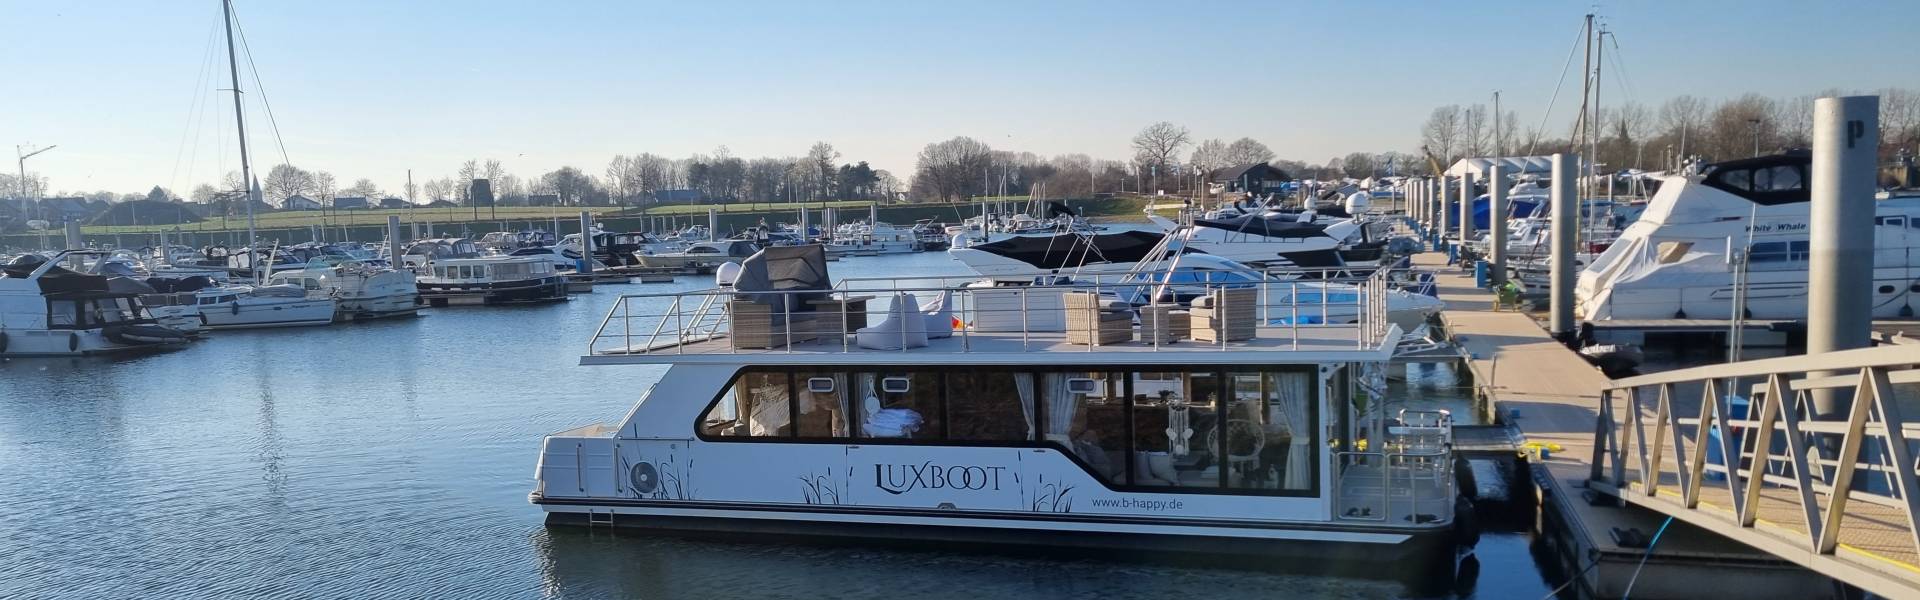 Luxboot klasse header